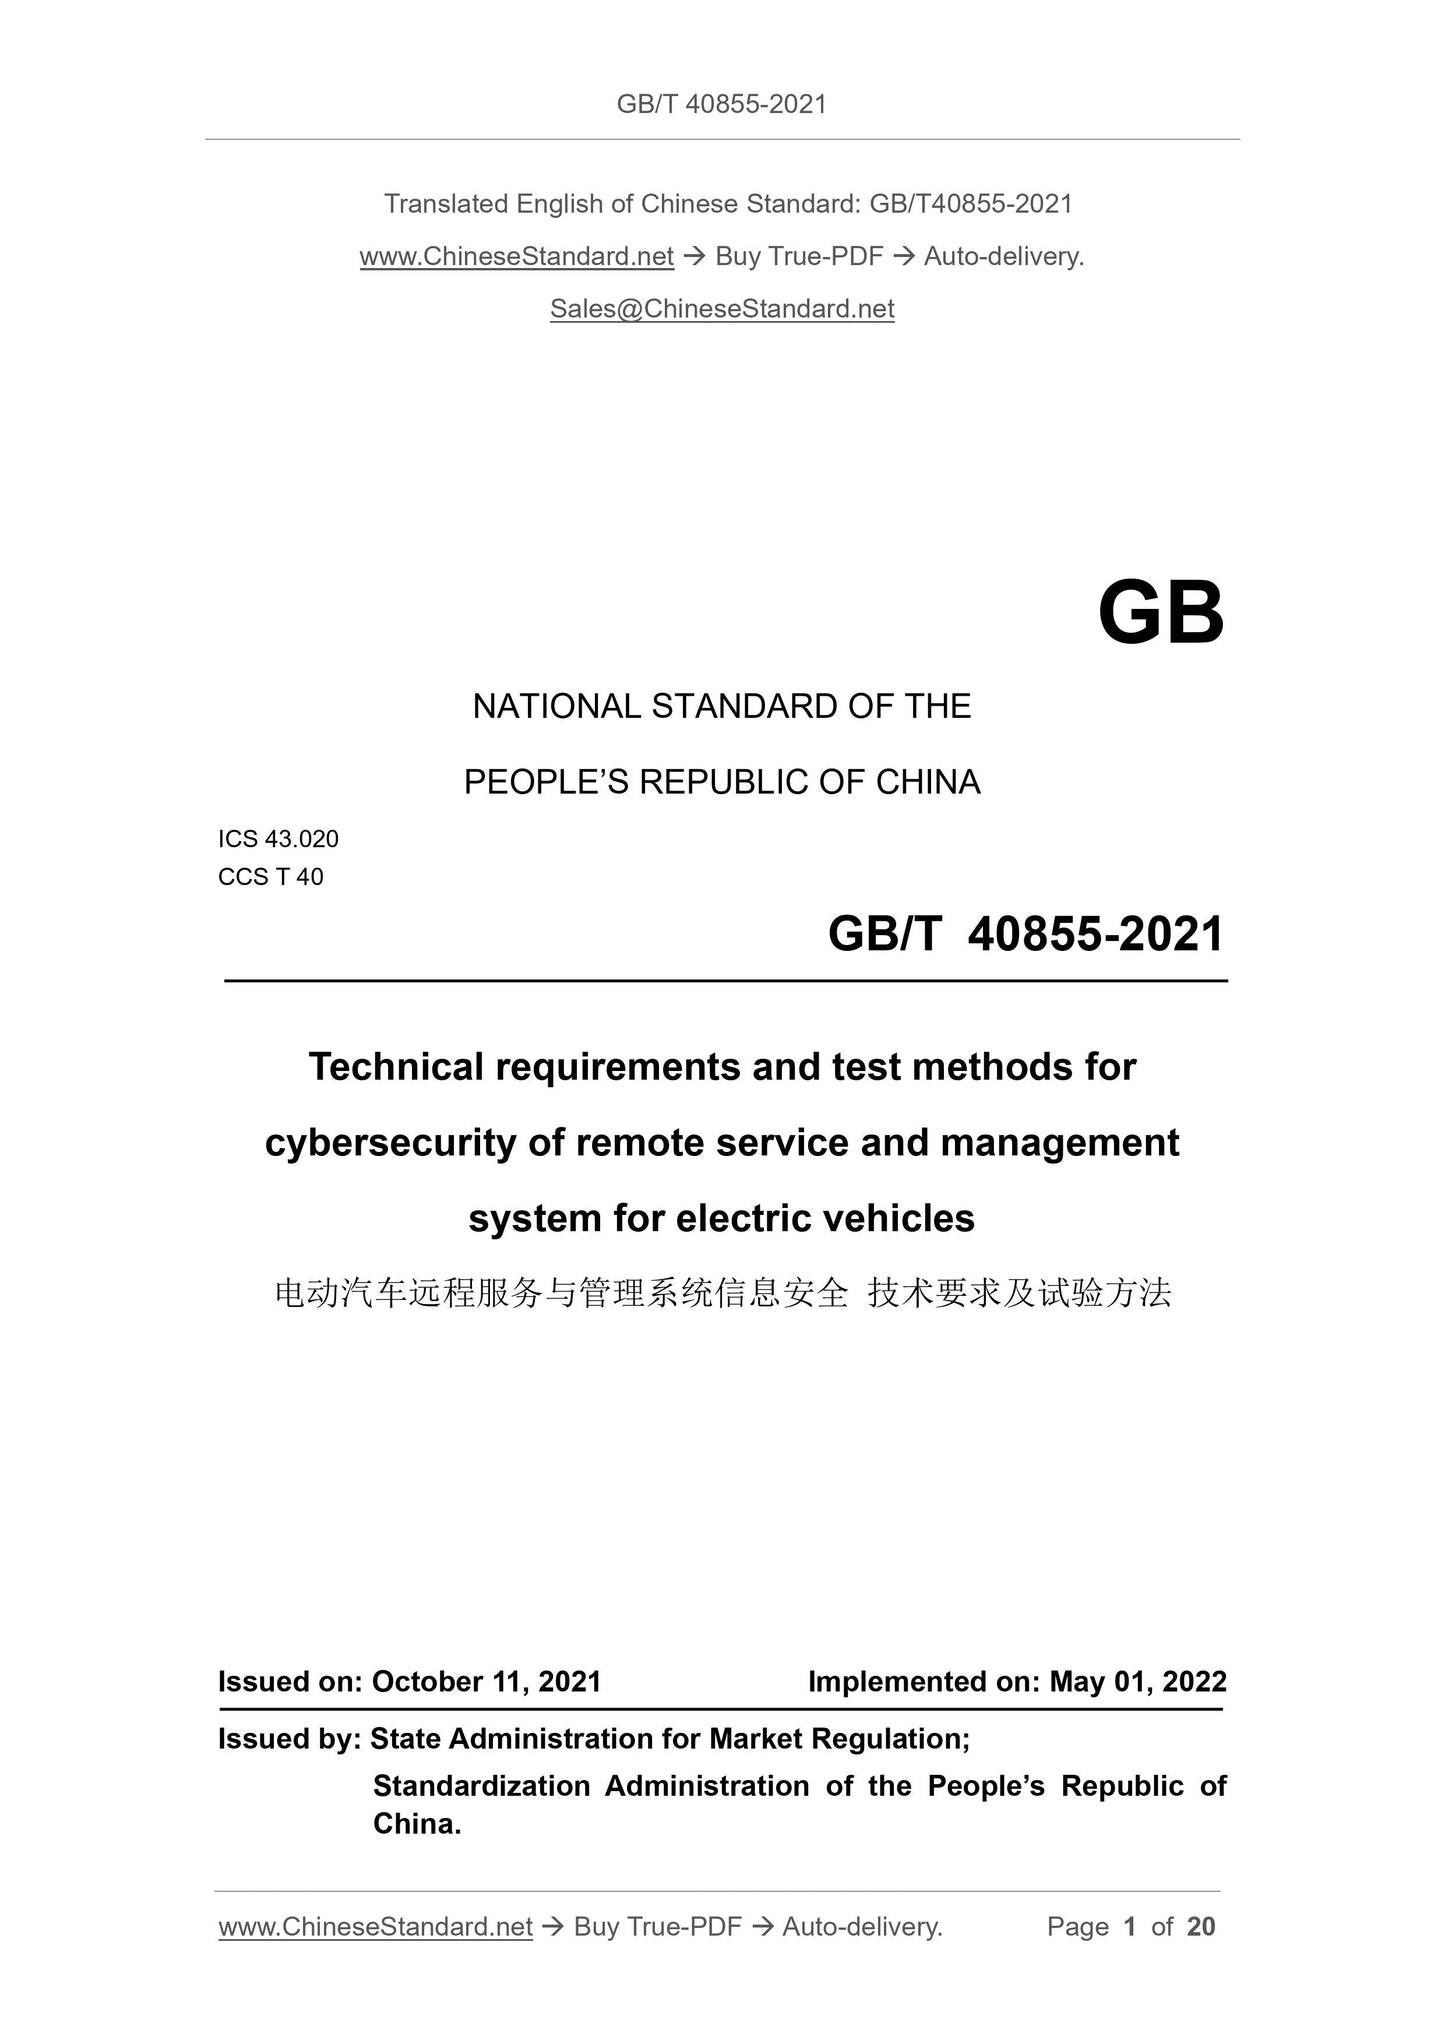 GBT40855-2021 Page 1